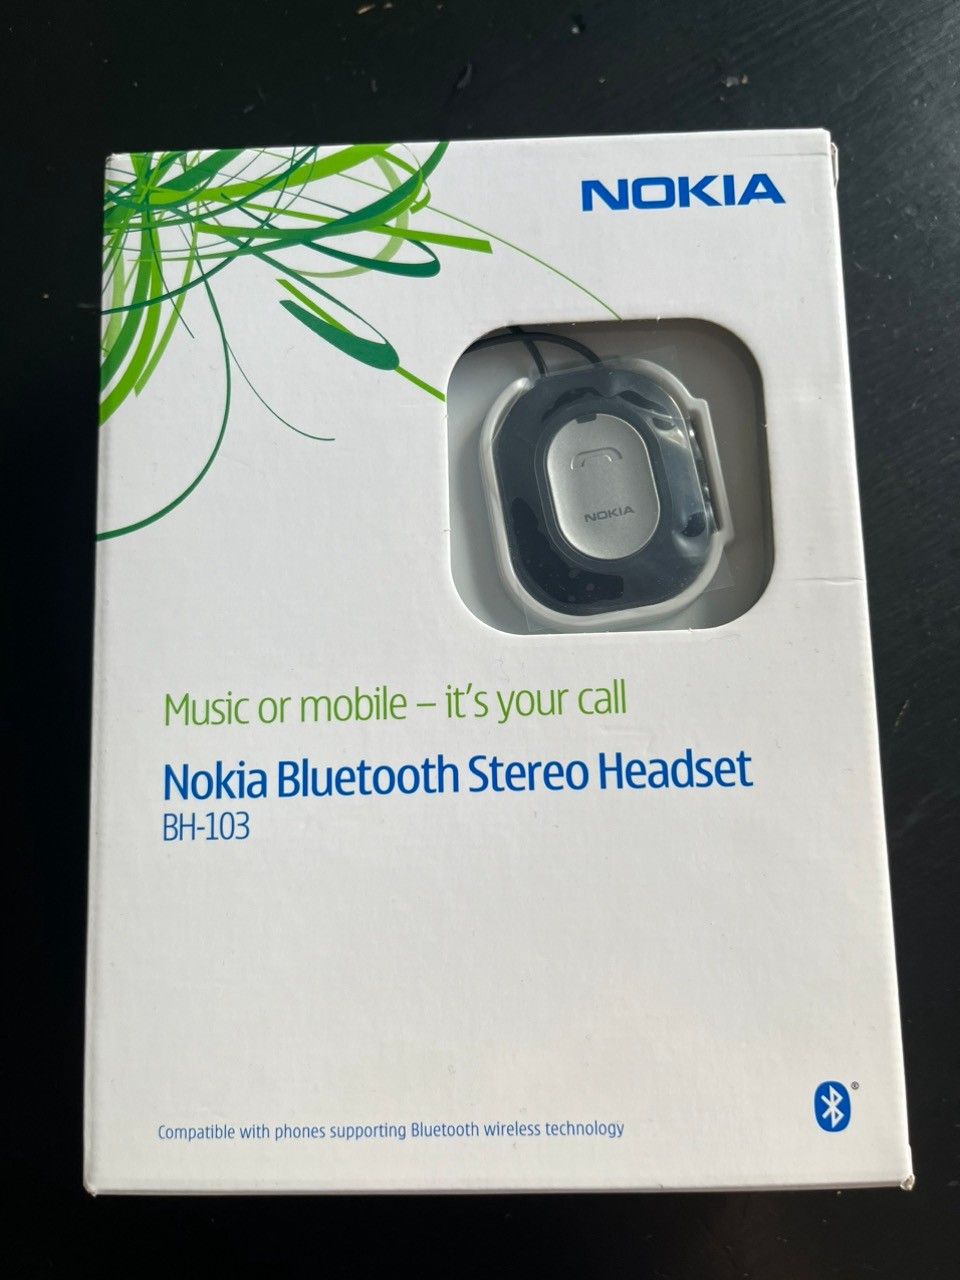 Nokia BH-103 Bluetooth Stereo Headset